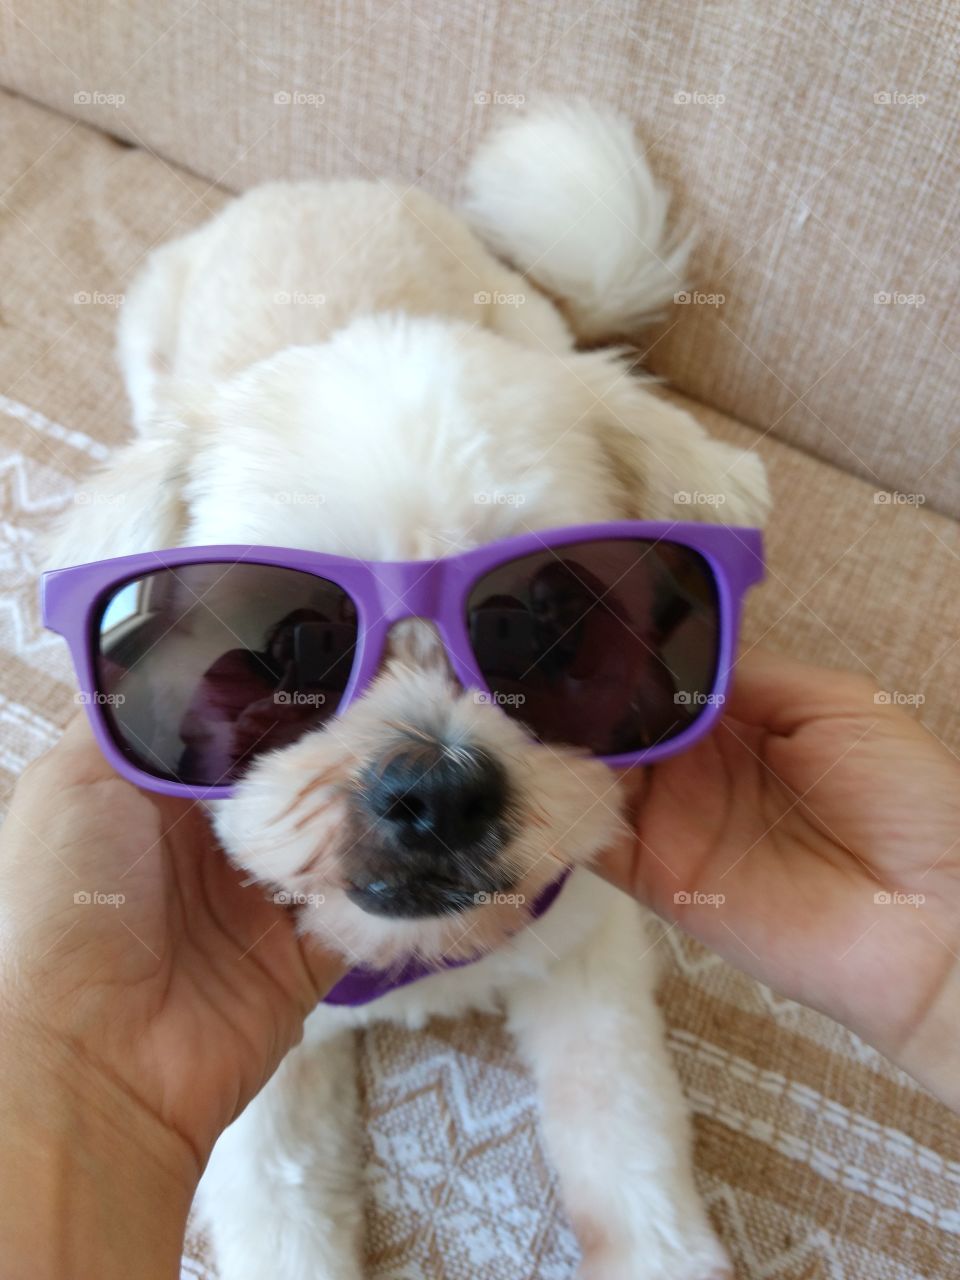 Sunglasses and a dog